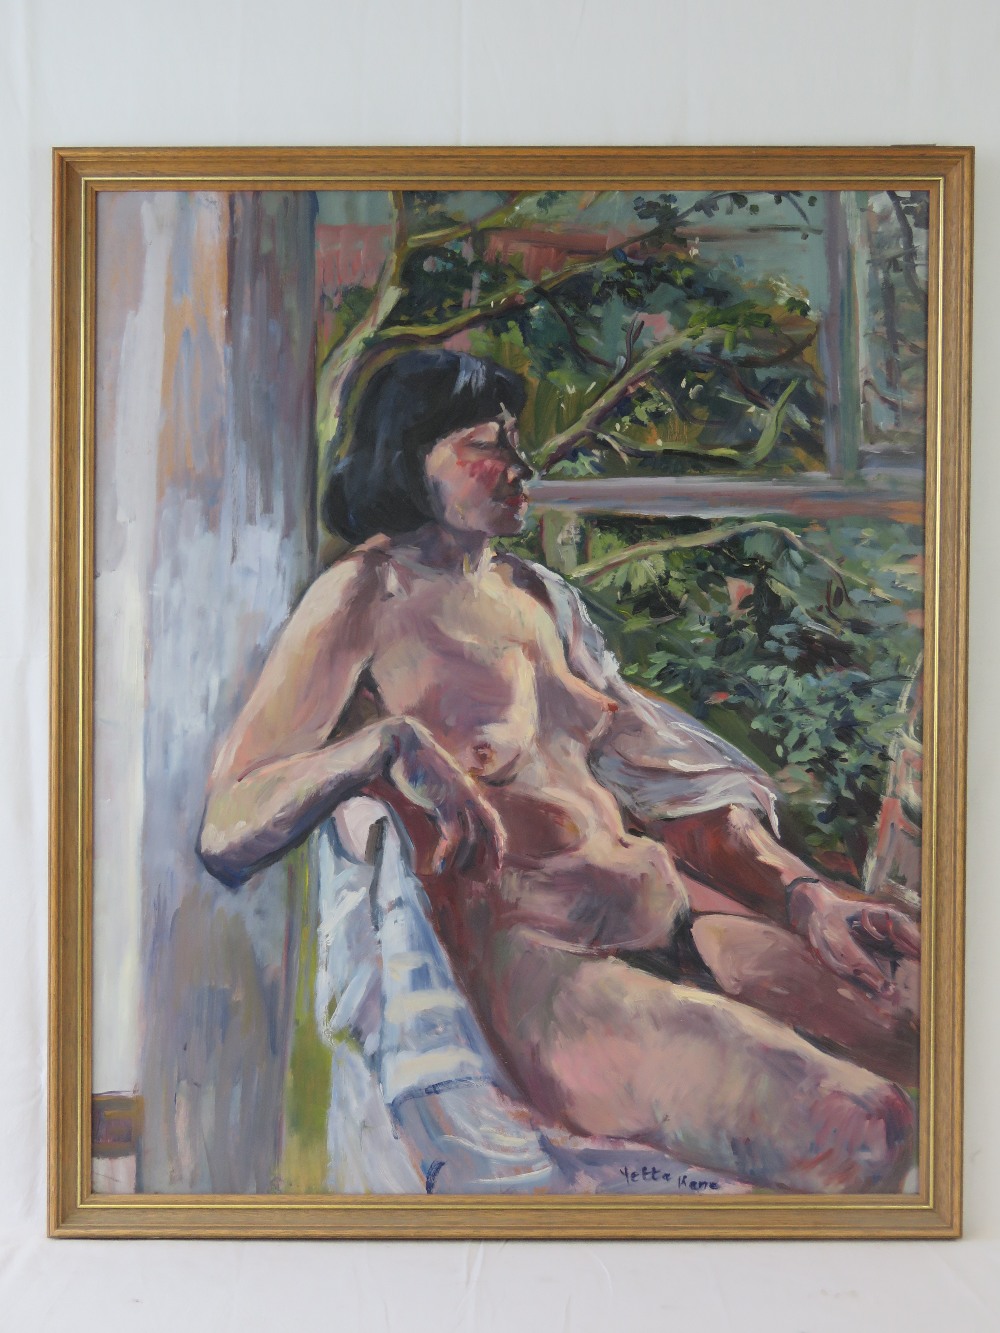 Yetta Kane (1923 - 2018). St Albans arti